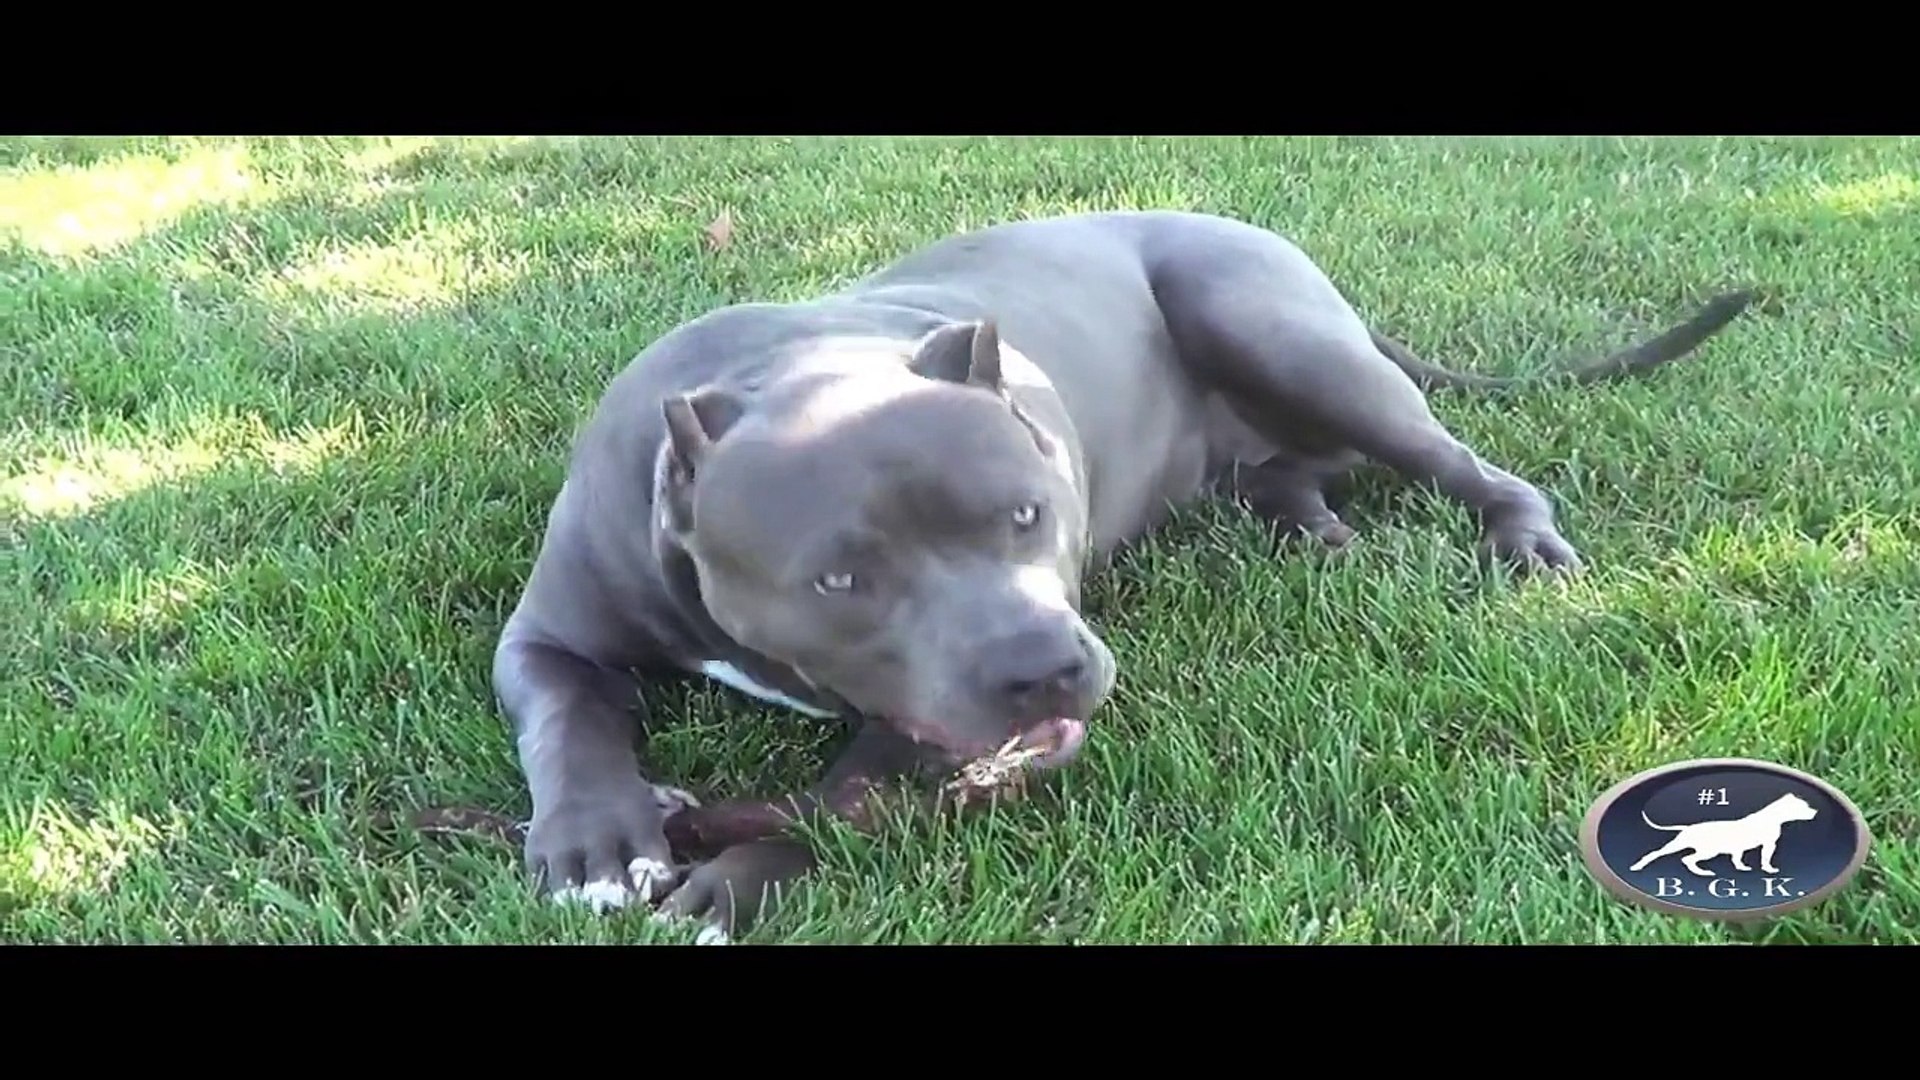 XL bully blue pitbull, 6 months old 